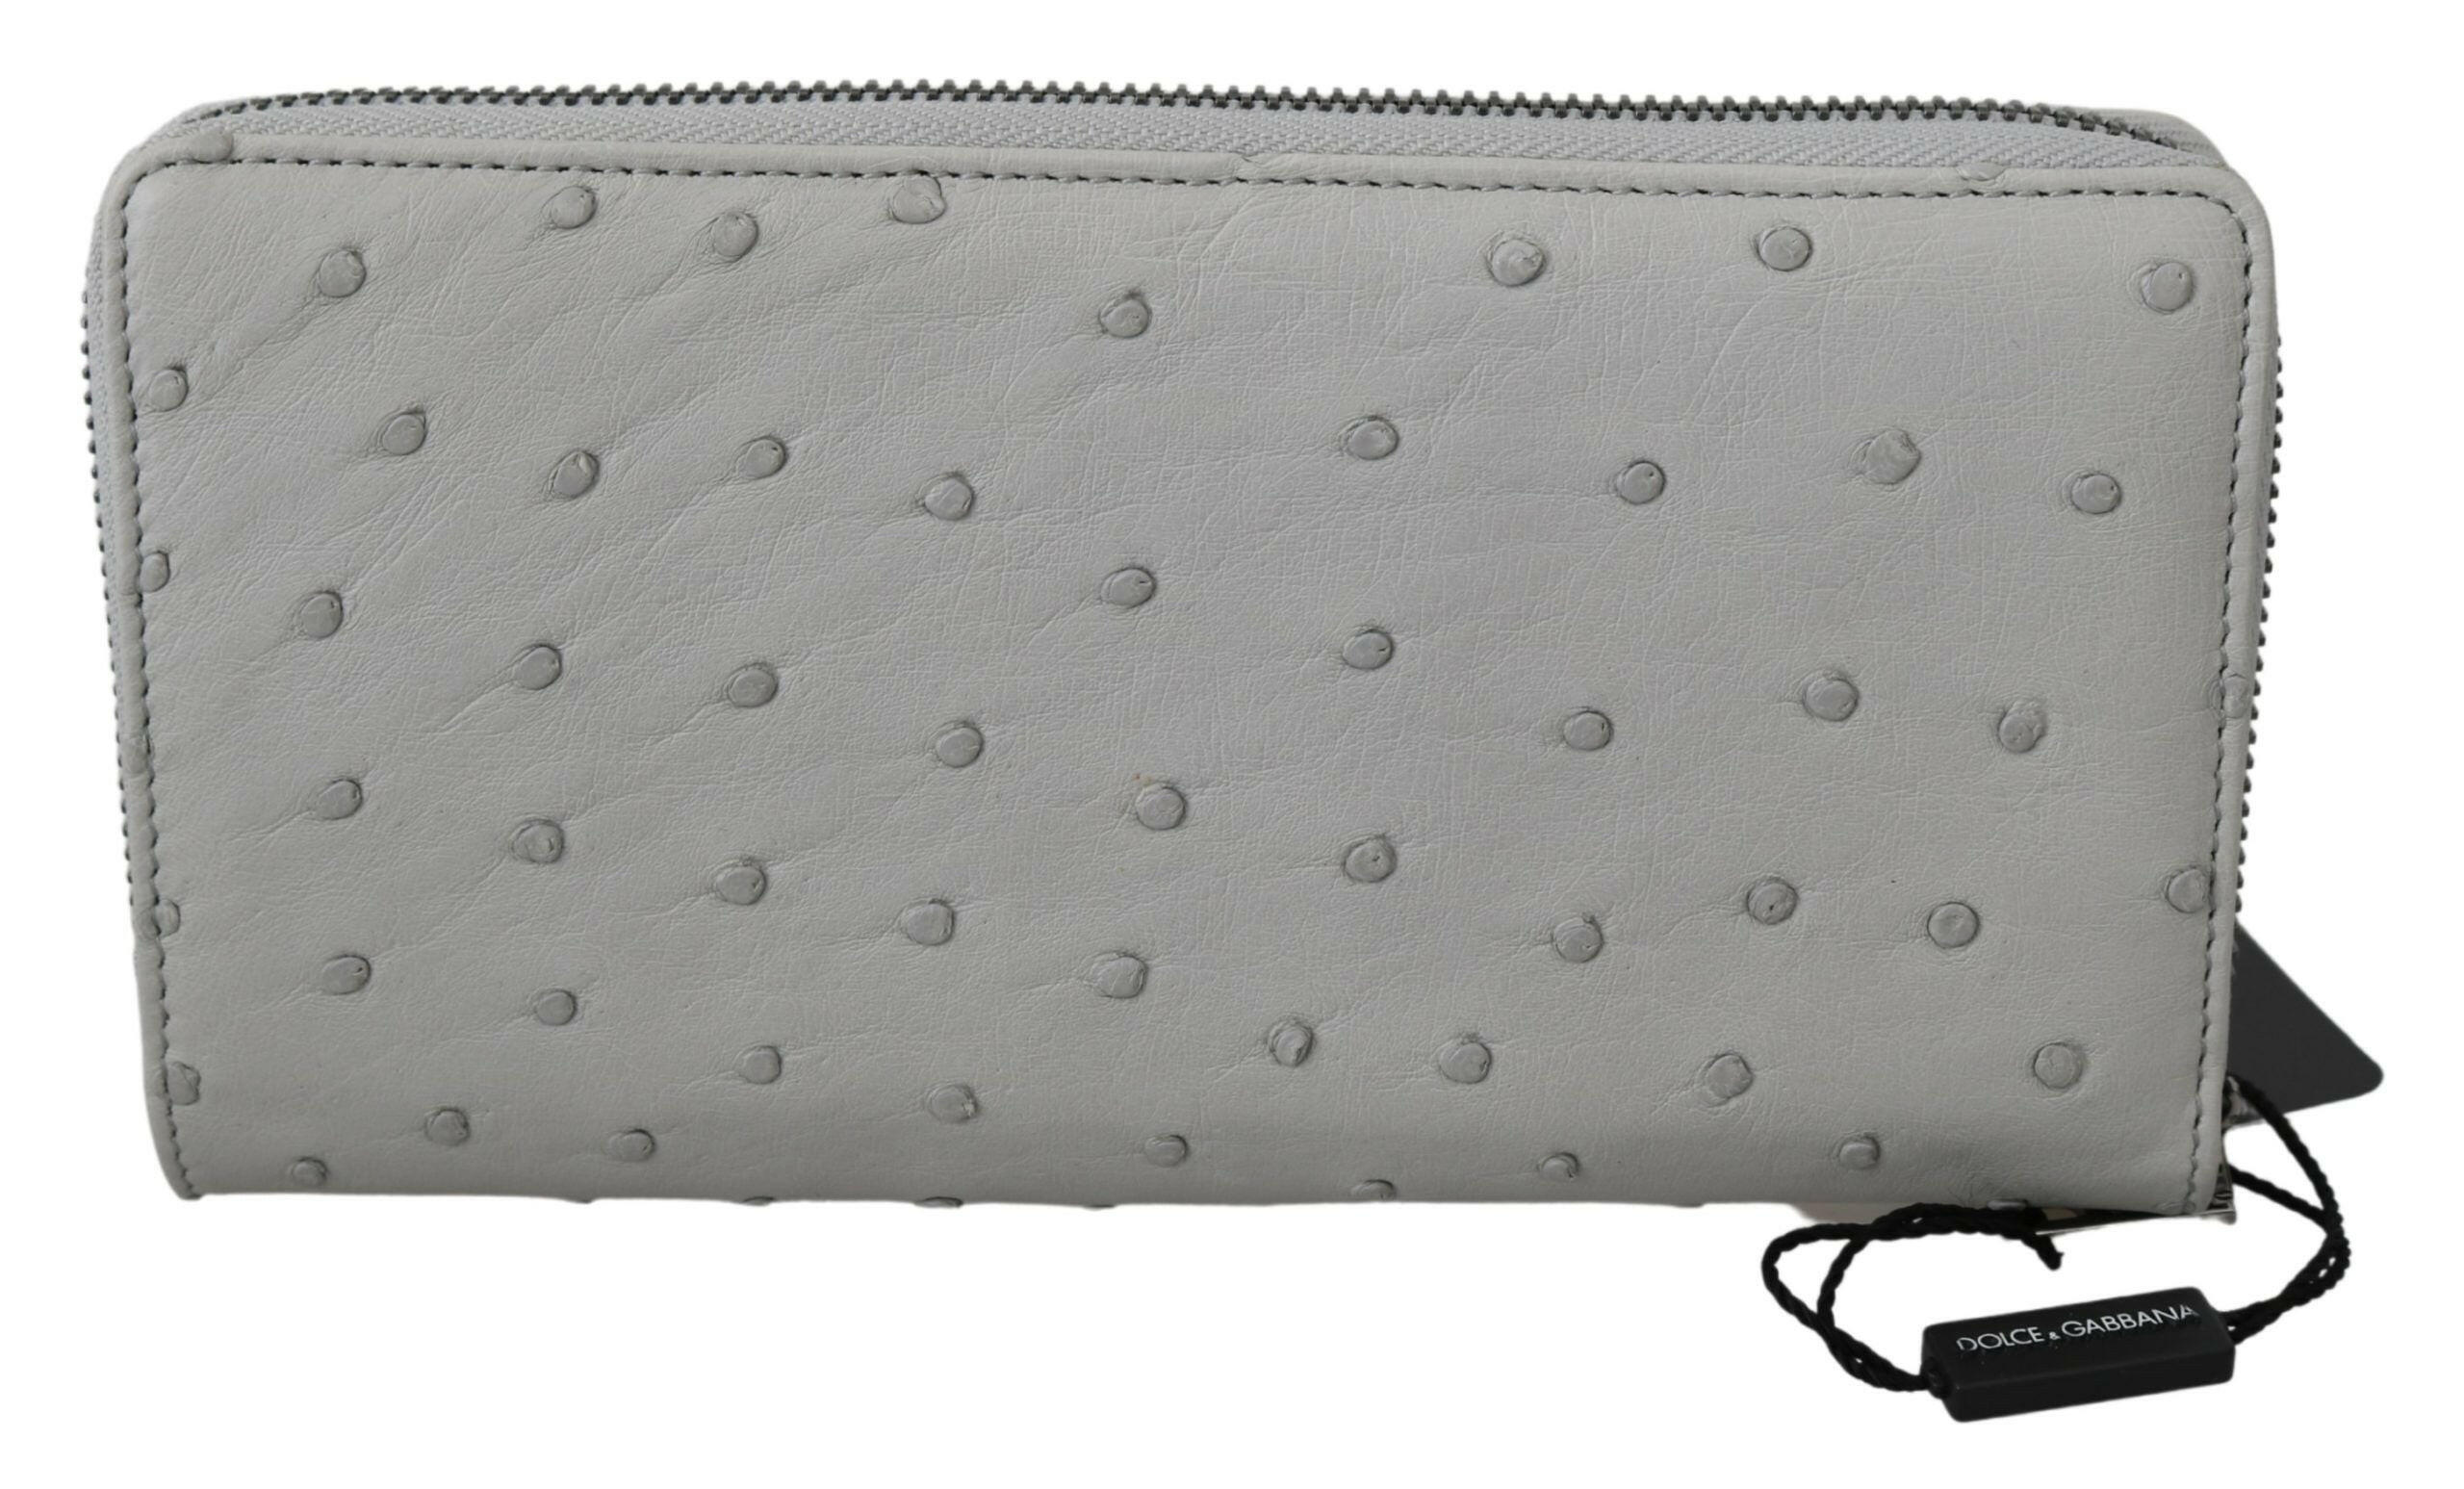 Dolce & Gabbana White Ostrich Leather Continental Mens Clutch Wallet - GENUINE AUTHENTIC BRAND LLC  